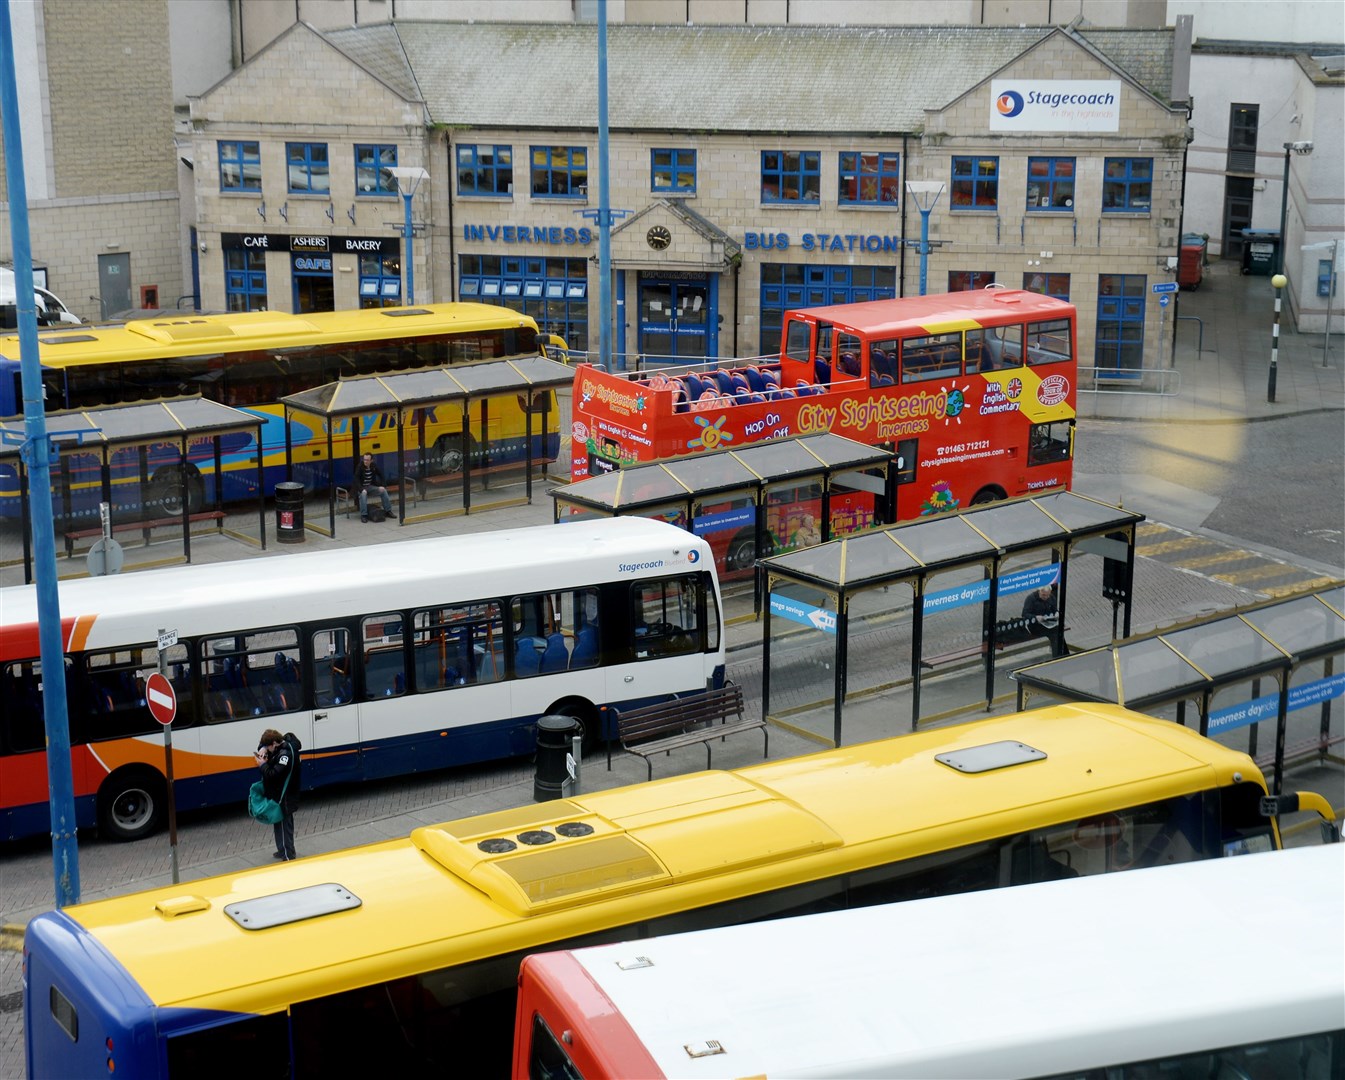 Under 18s look set to enjoy free bus travel under Scottish Government plans.